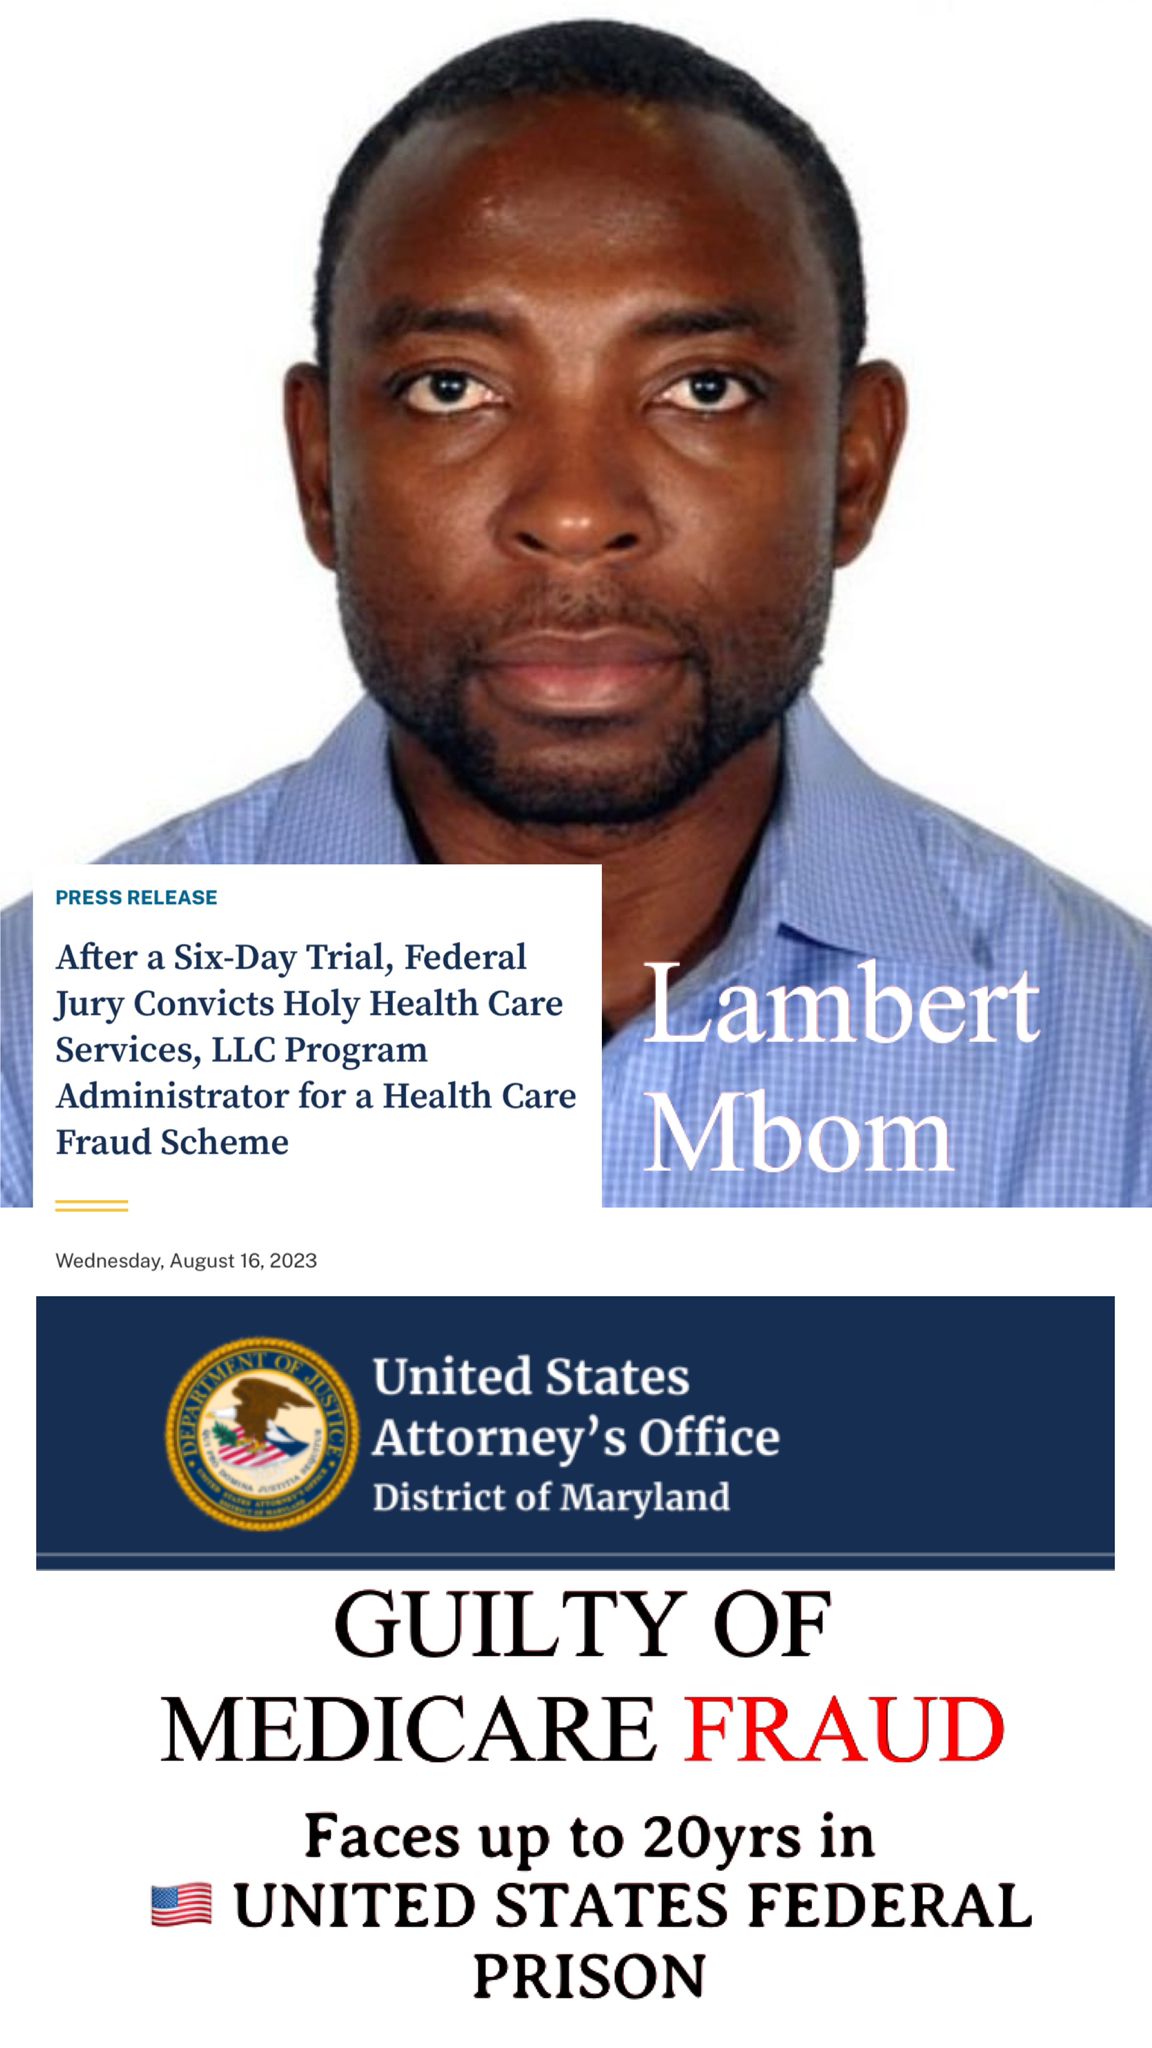 Guilty of Medical Fraud! Lambert Mbom, Amba Terrorist in the USA